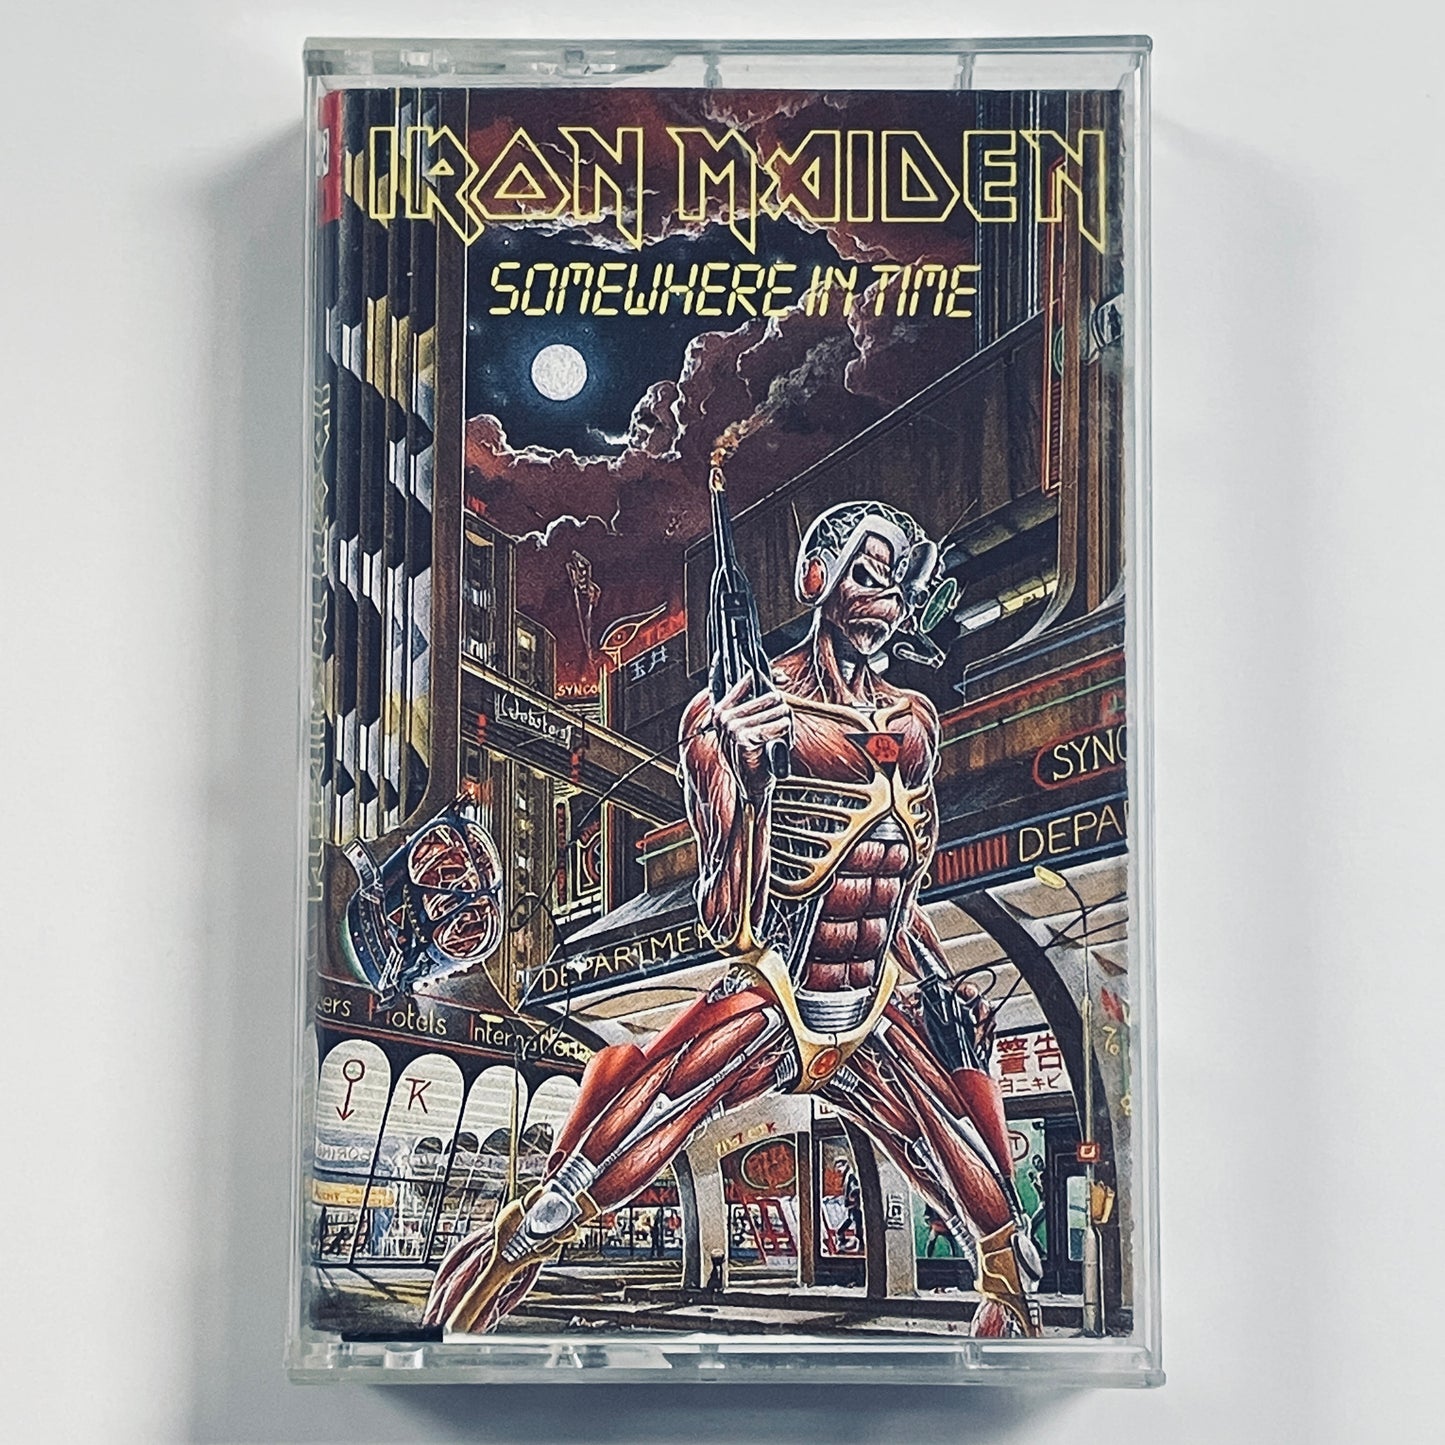 Iron Maiden - Somewhere In Time original cassette tape